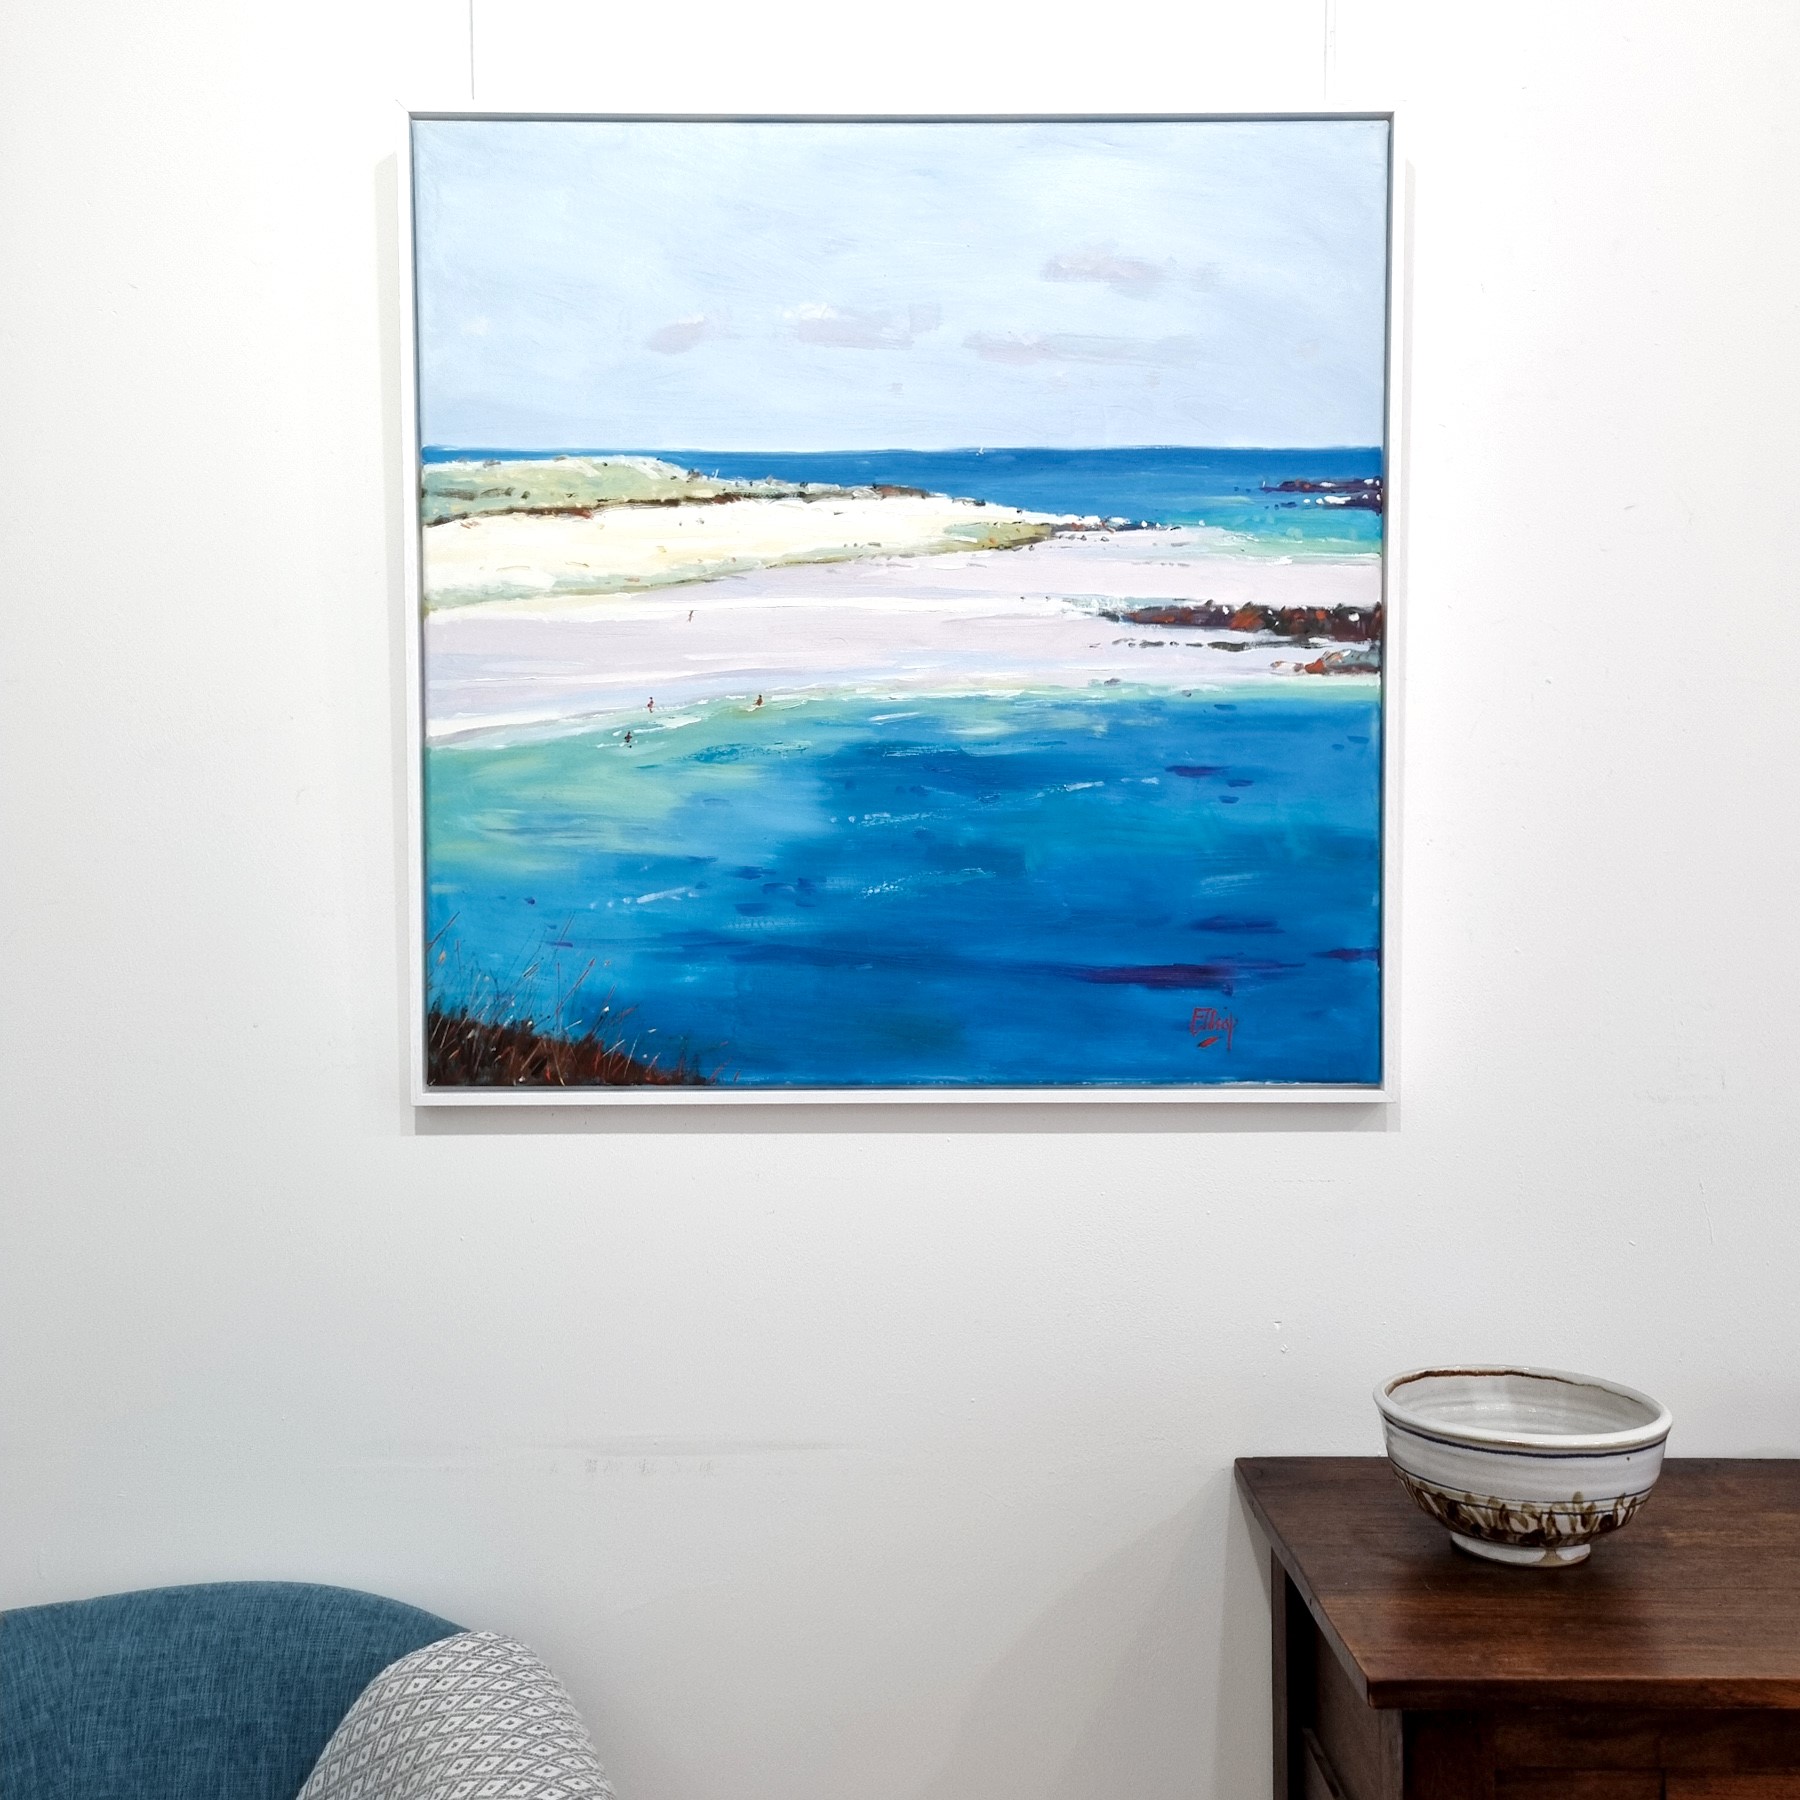 'Calm Day, Shell Beach, Herm Island' by artist Ian Elliot